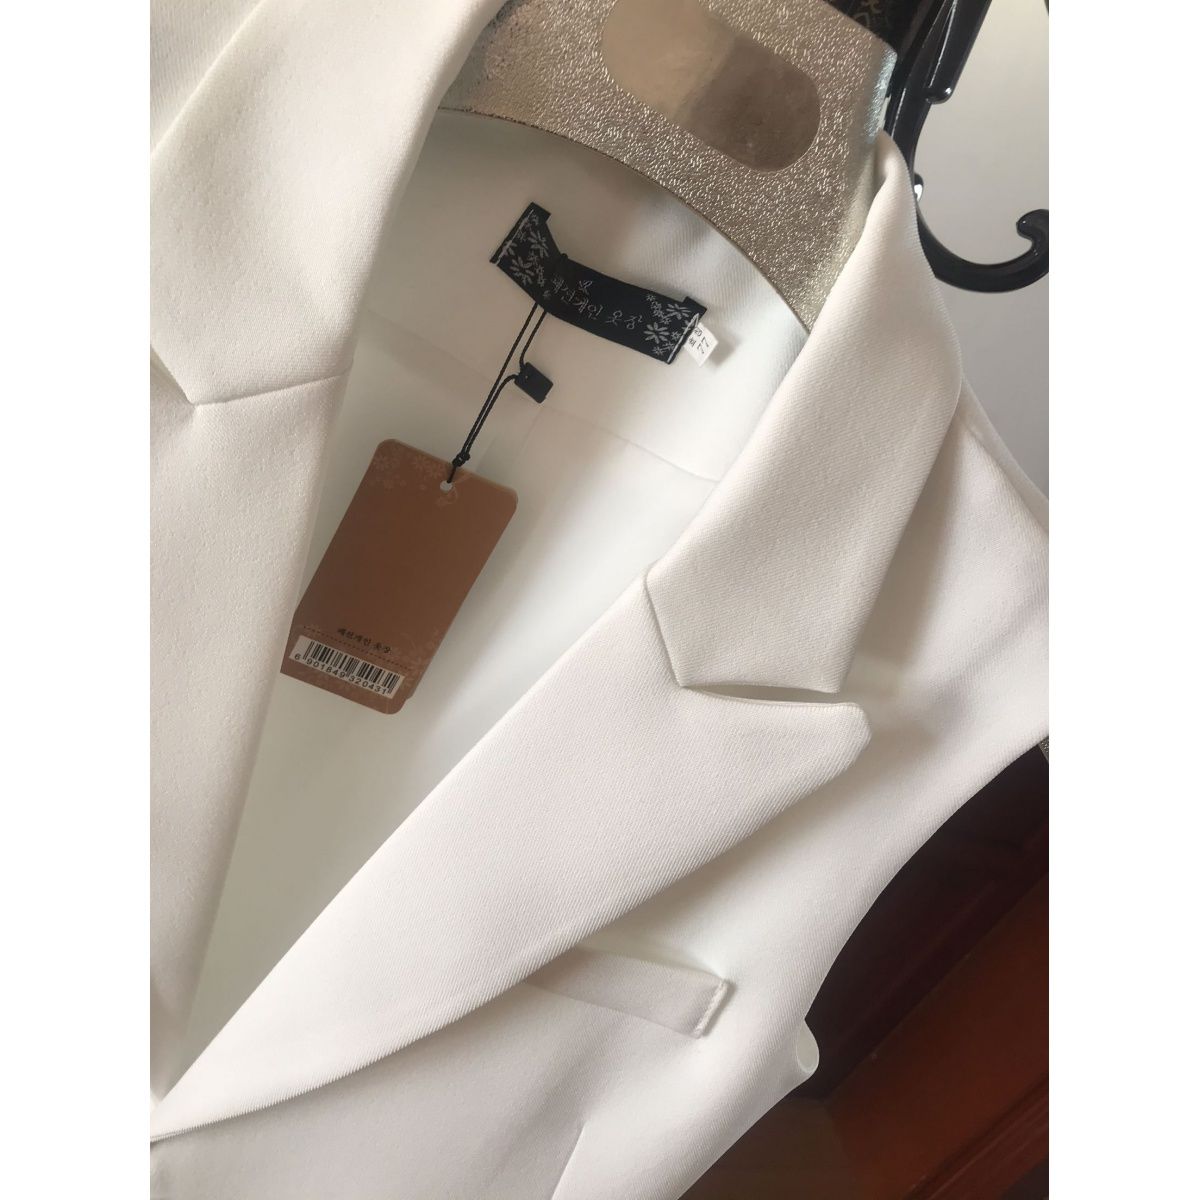 Quilted spring, summer and autumn new suit vest female Korean version jacket short white outerwear all-match waistcoat vest vest vest